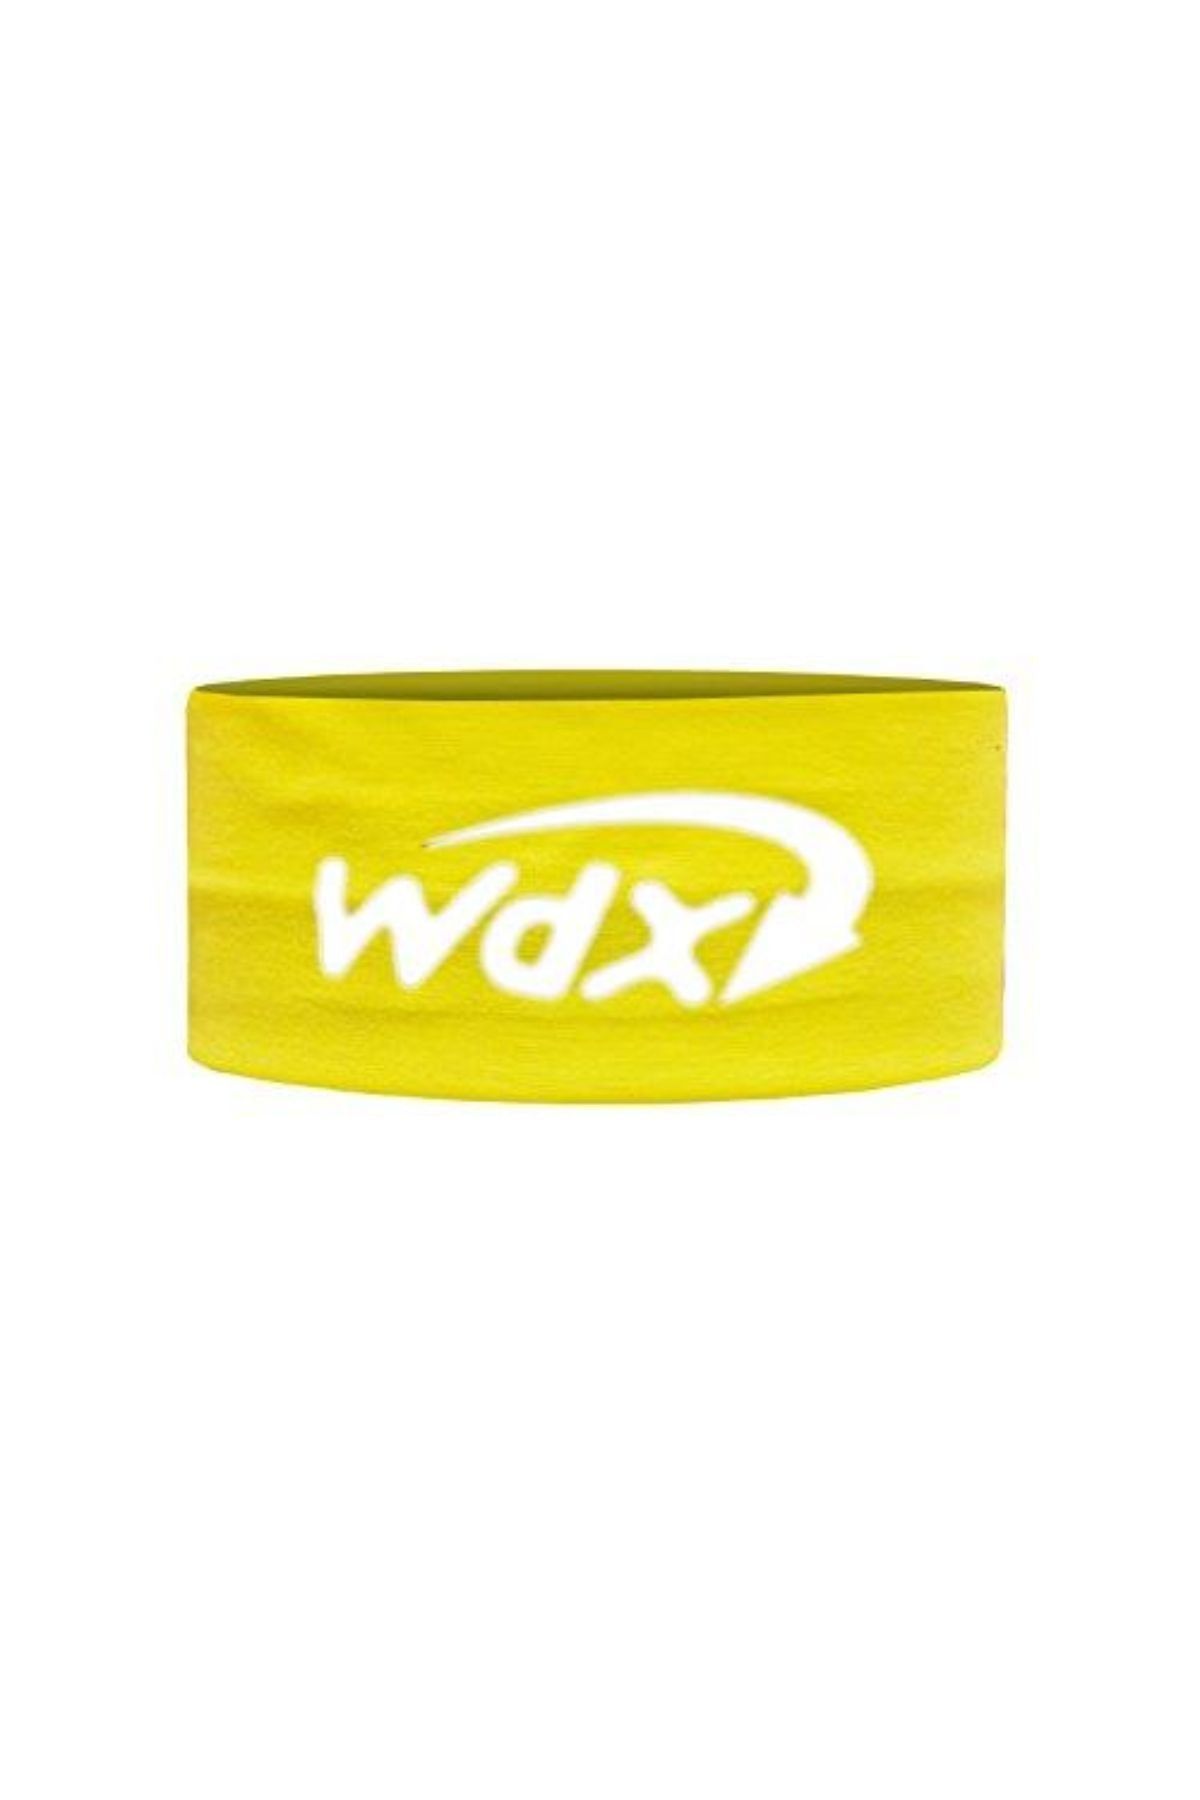 Wind Extreme Headband Reflect Fluor Wd15027